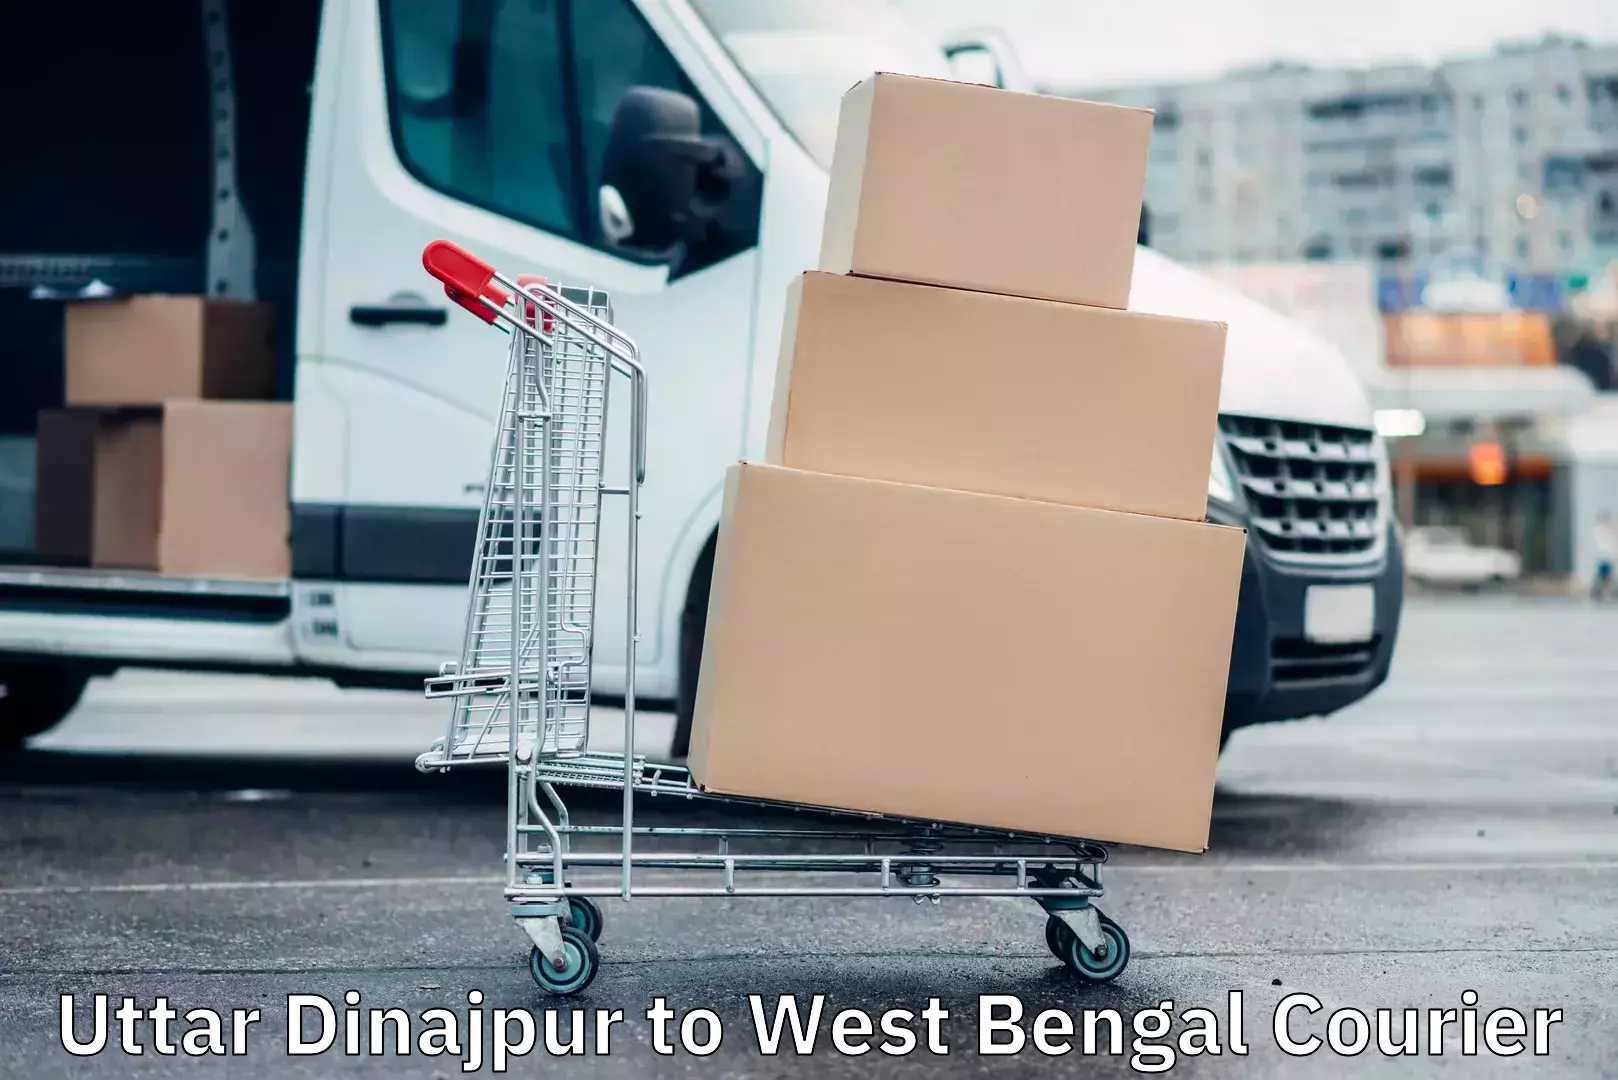 Efficient order fulfillment Uttar Dinajpur to West Bengal